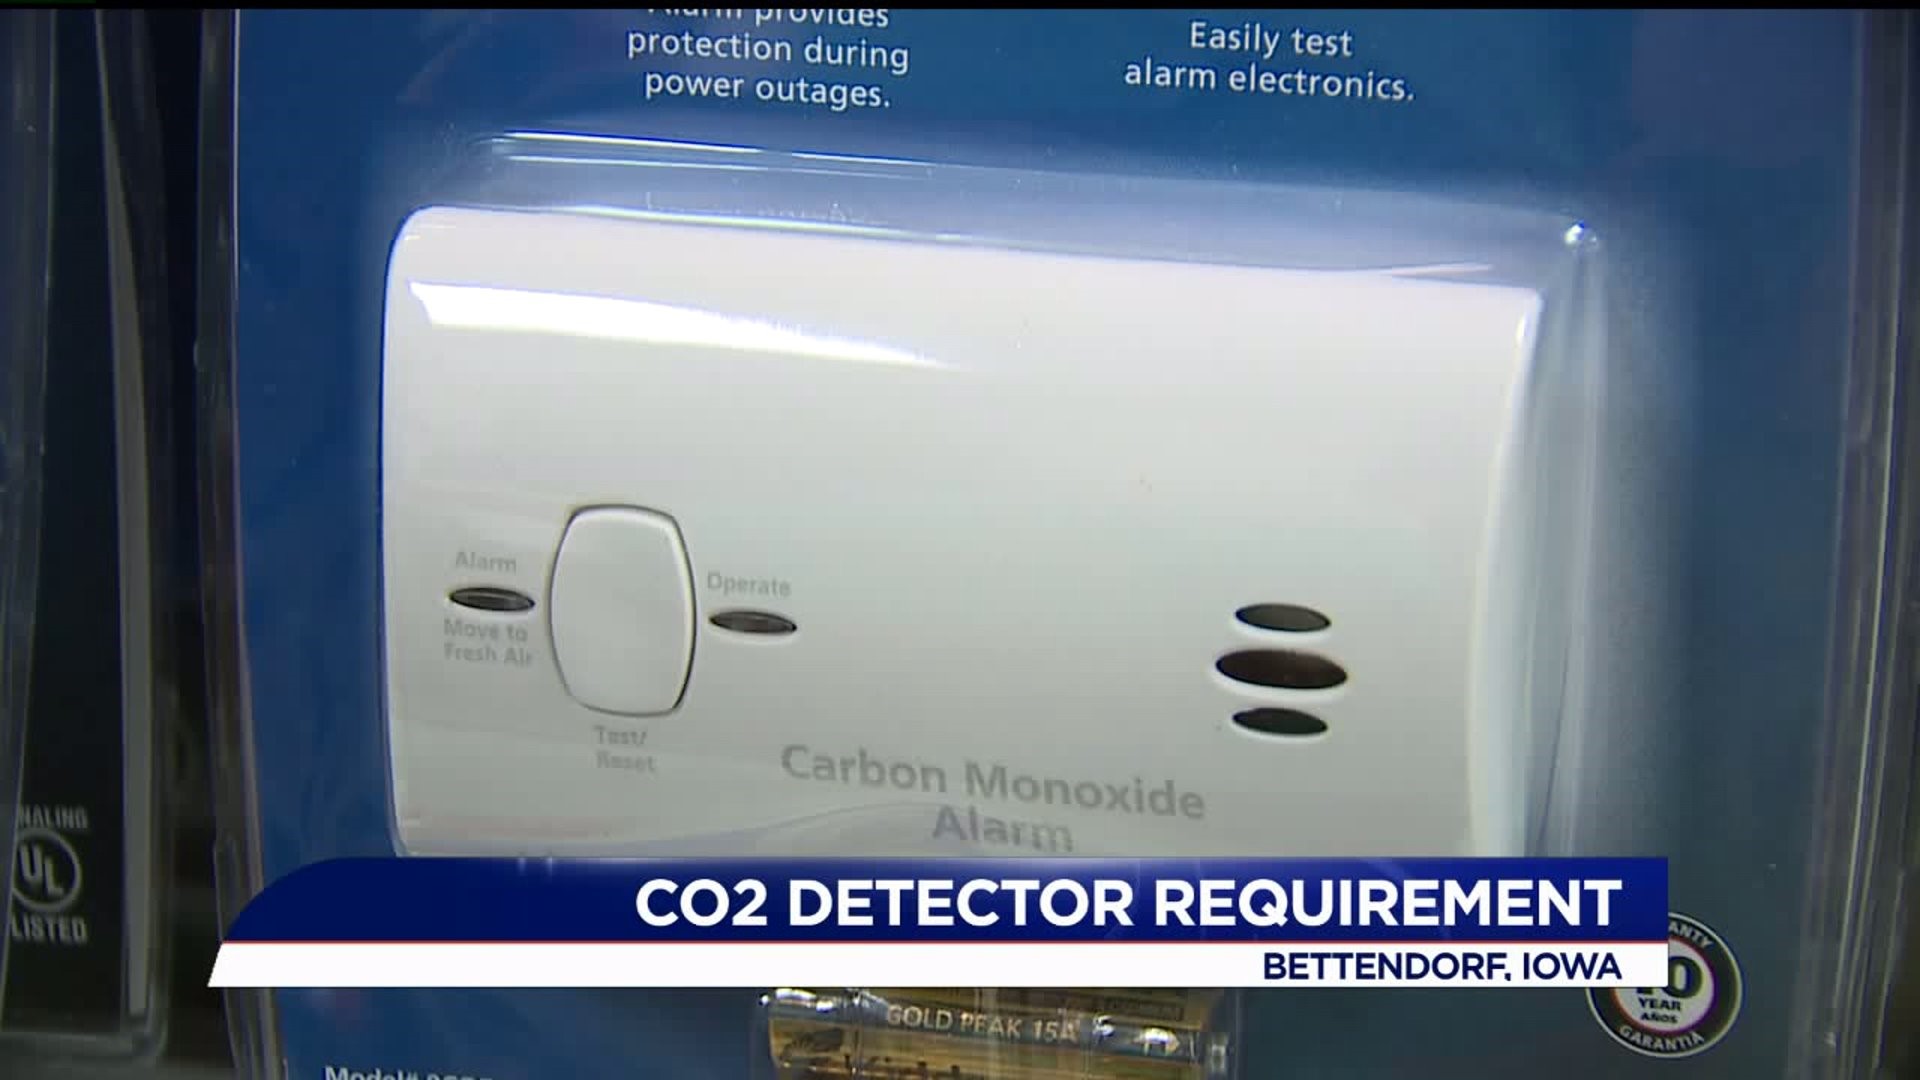 Iowa will require CO2 detectors in all homes